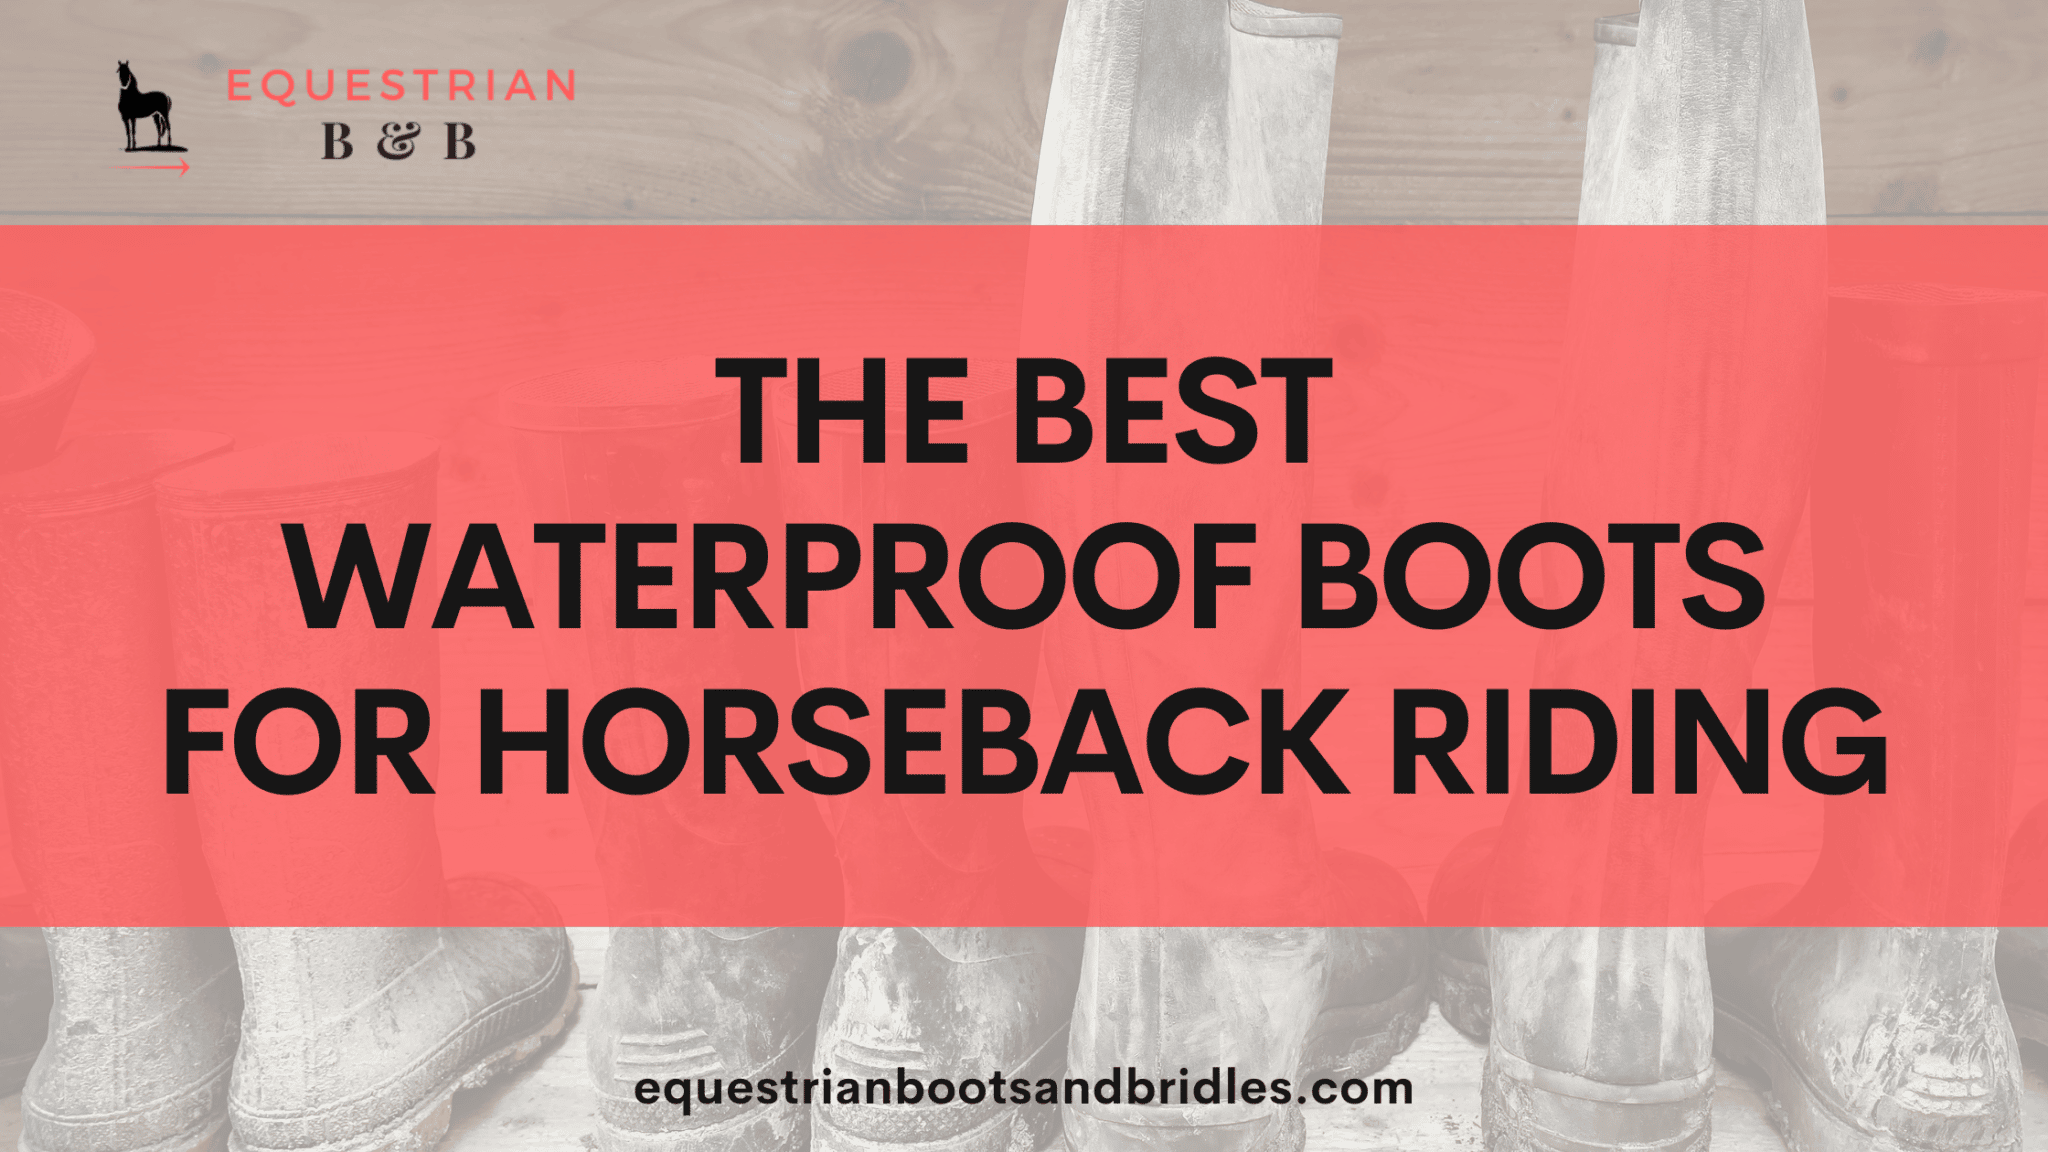 best waterproof horseback riding boots on equestrianbootsandbridles.com